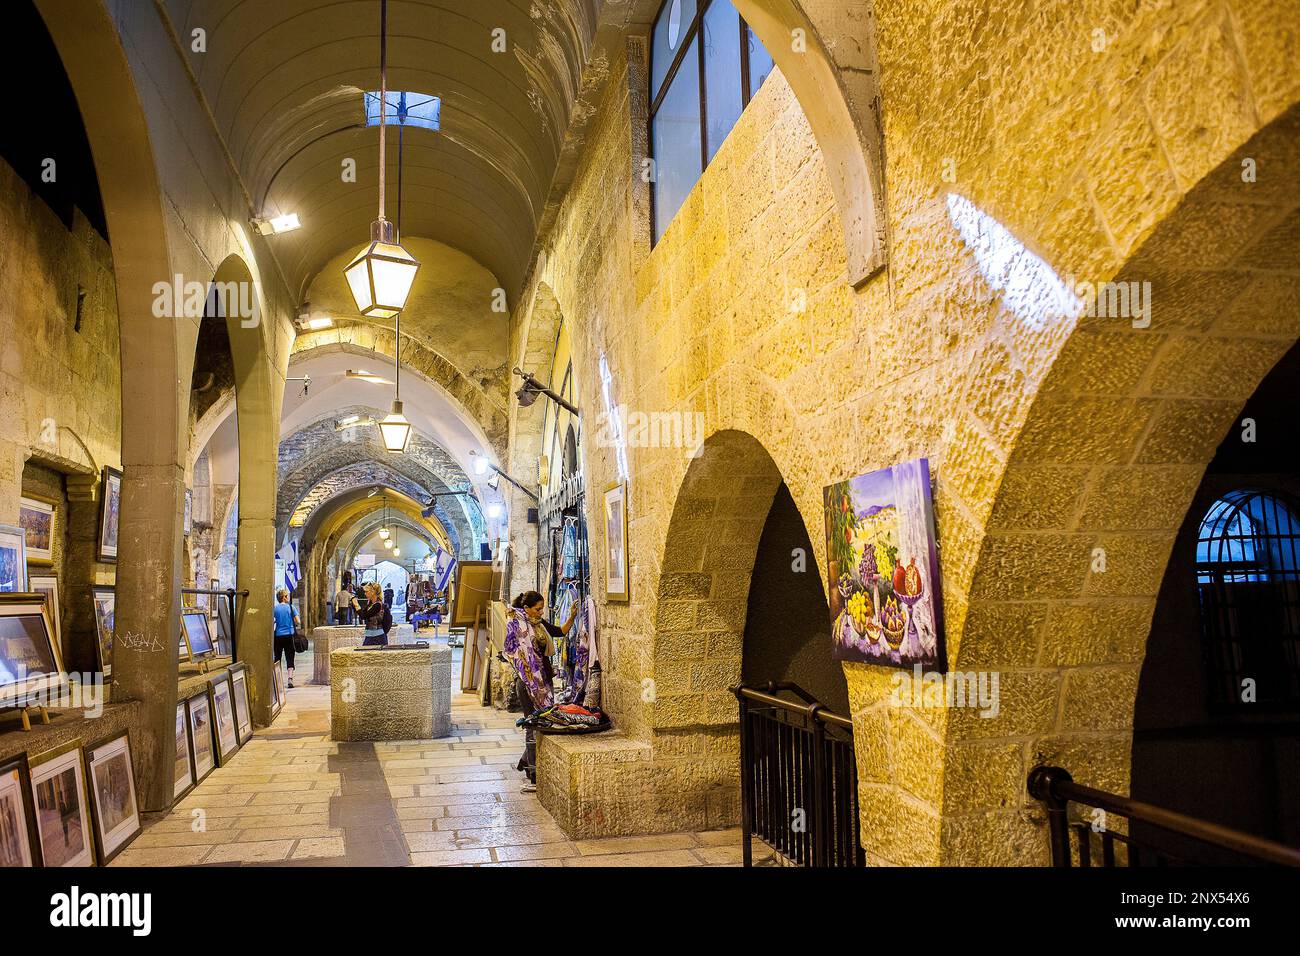 The Cardo, Jewish Quarter, Old City, Jerusalem, Israel. Stock Photo